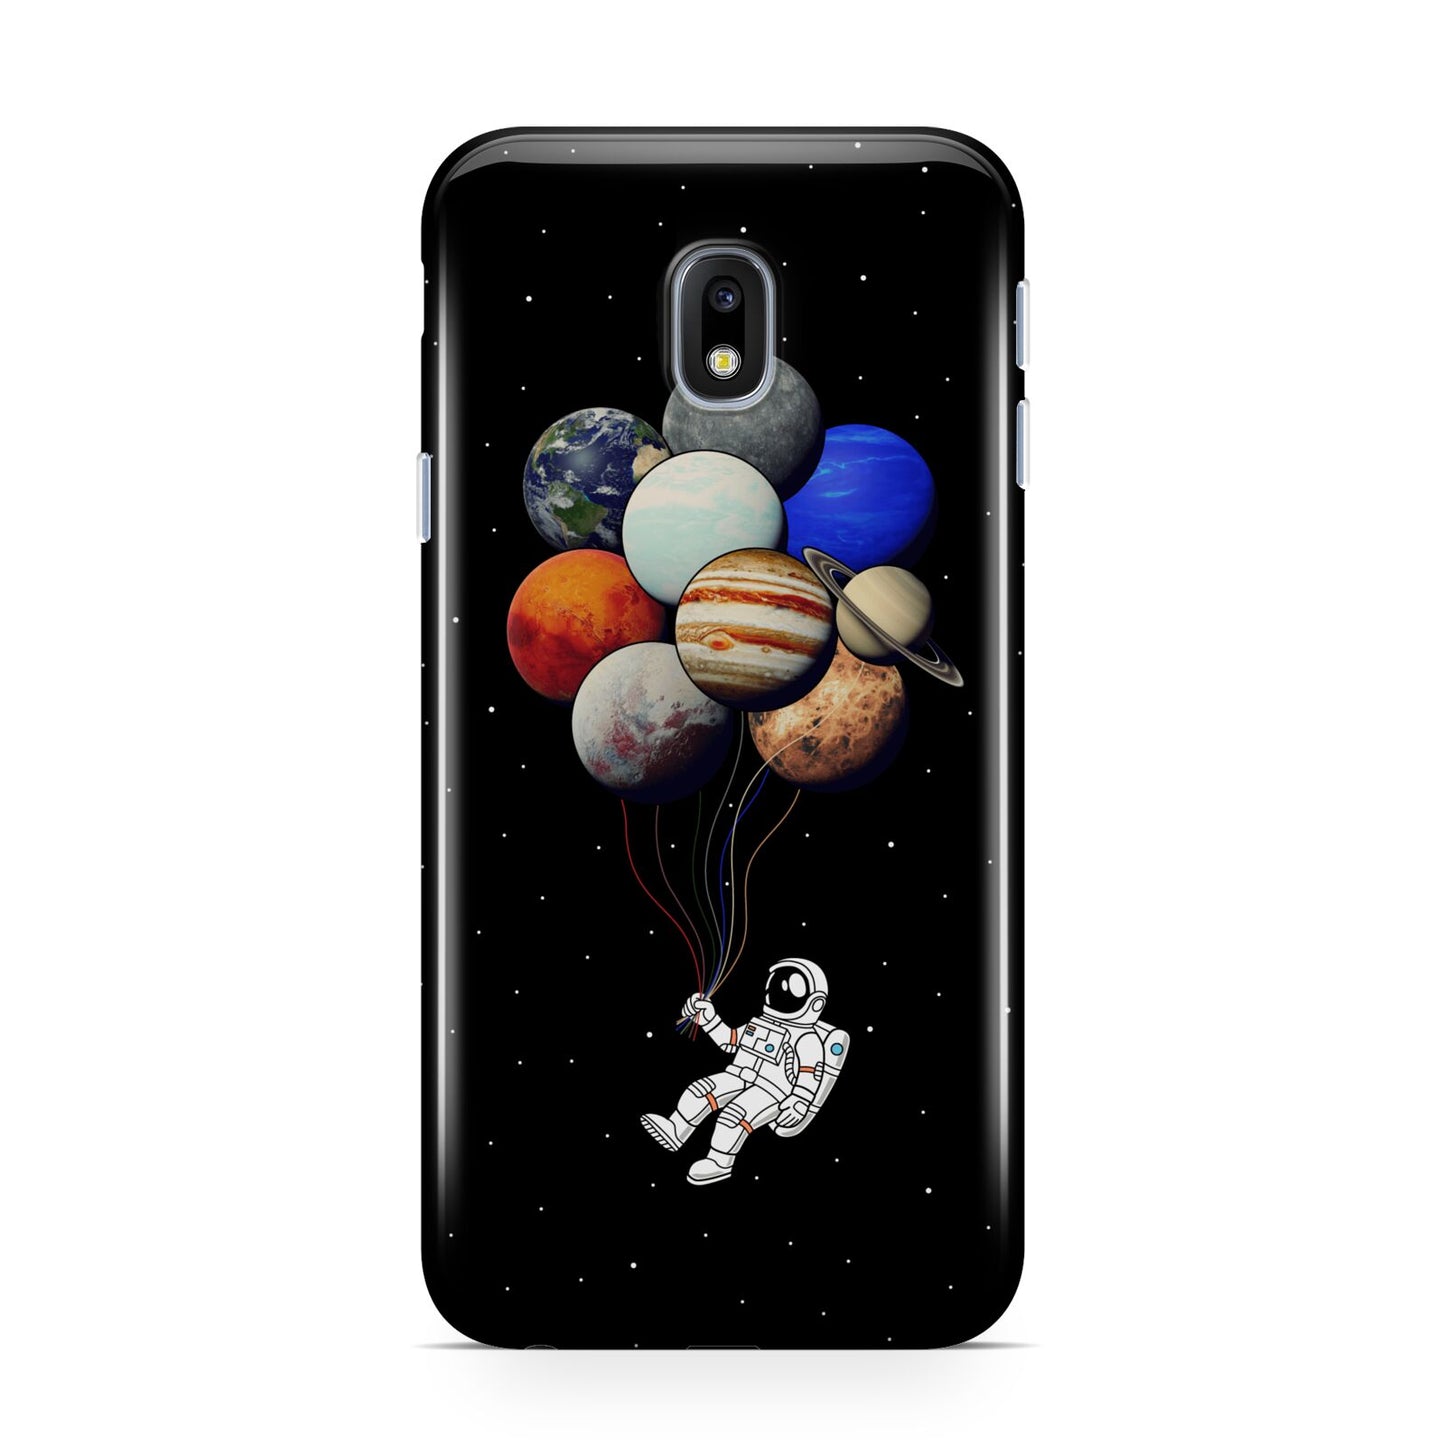 Astronaut Planet Balloons Samsung Galaxy J3 2017 Case